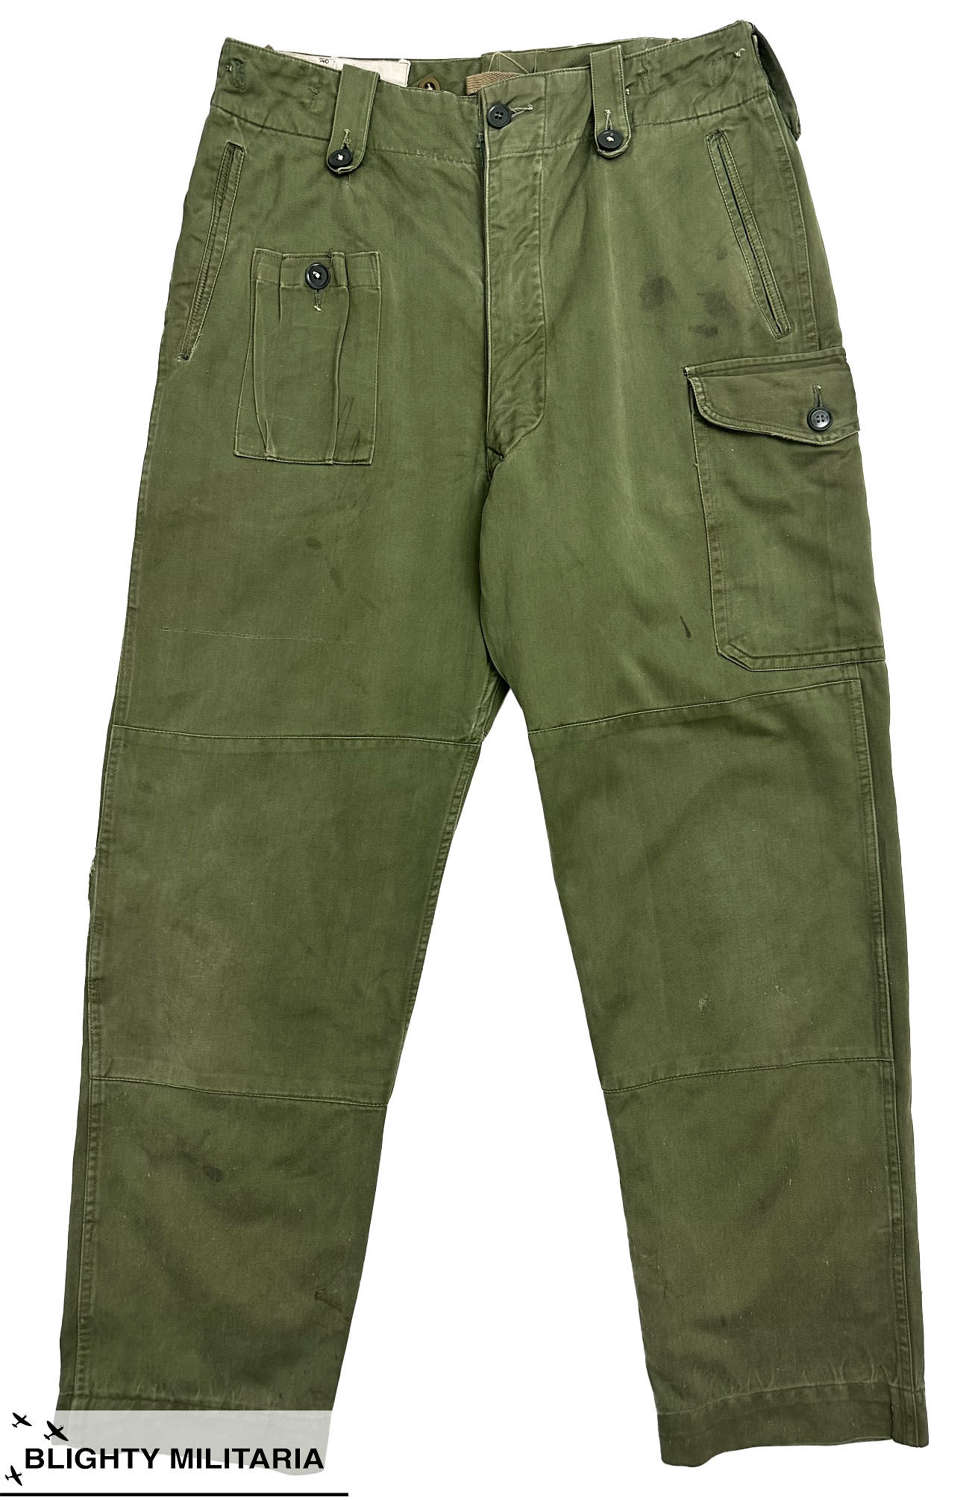 Original 1960s British Army 1960 Pattern Combat Trousers - Size 2